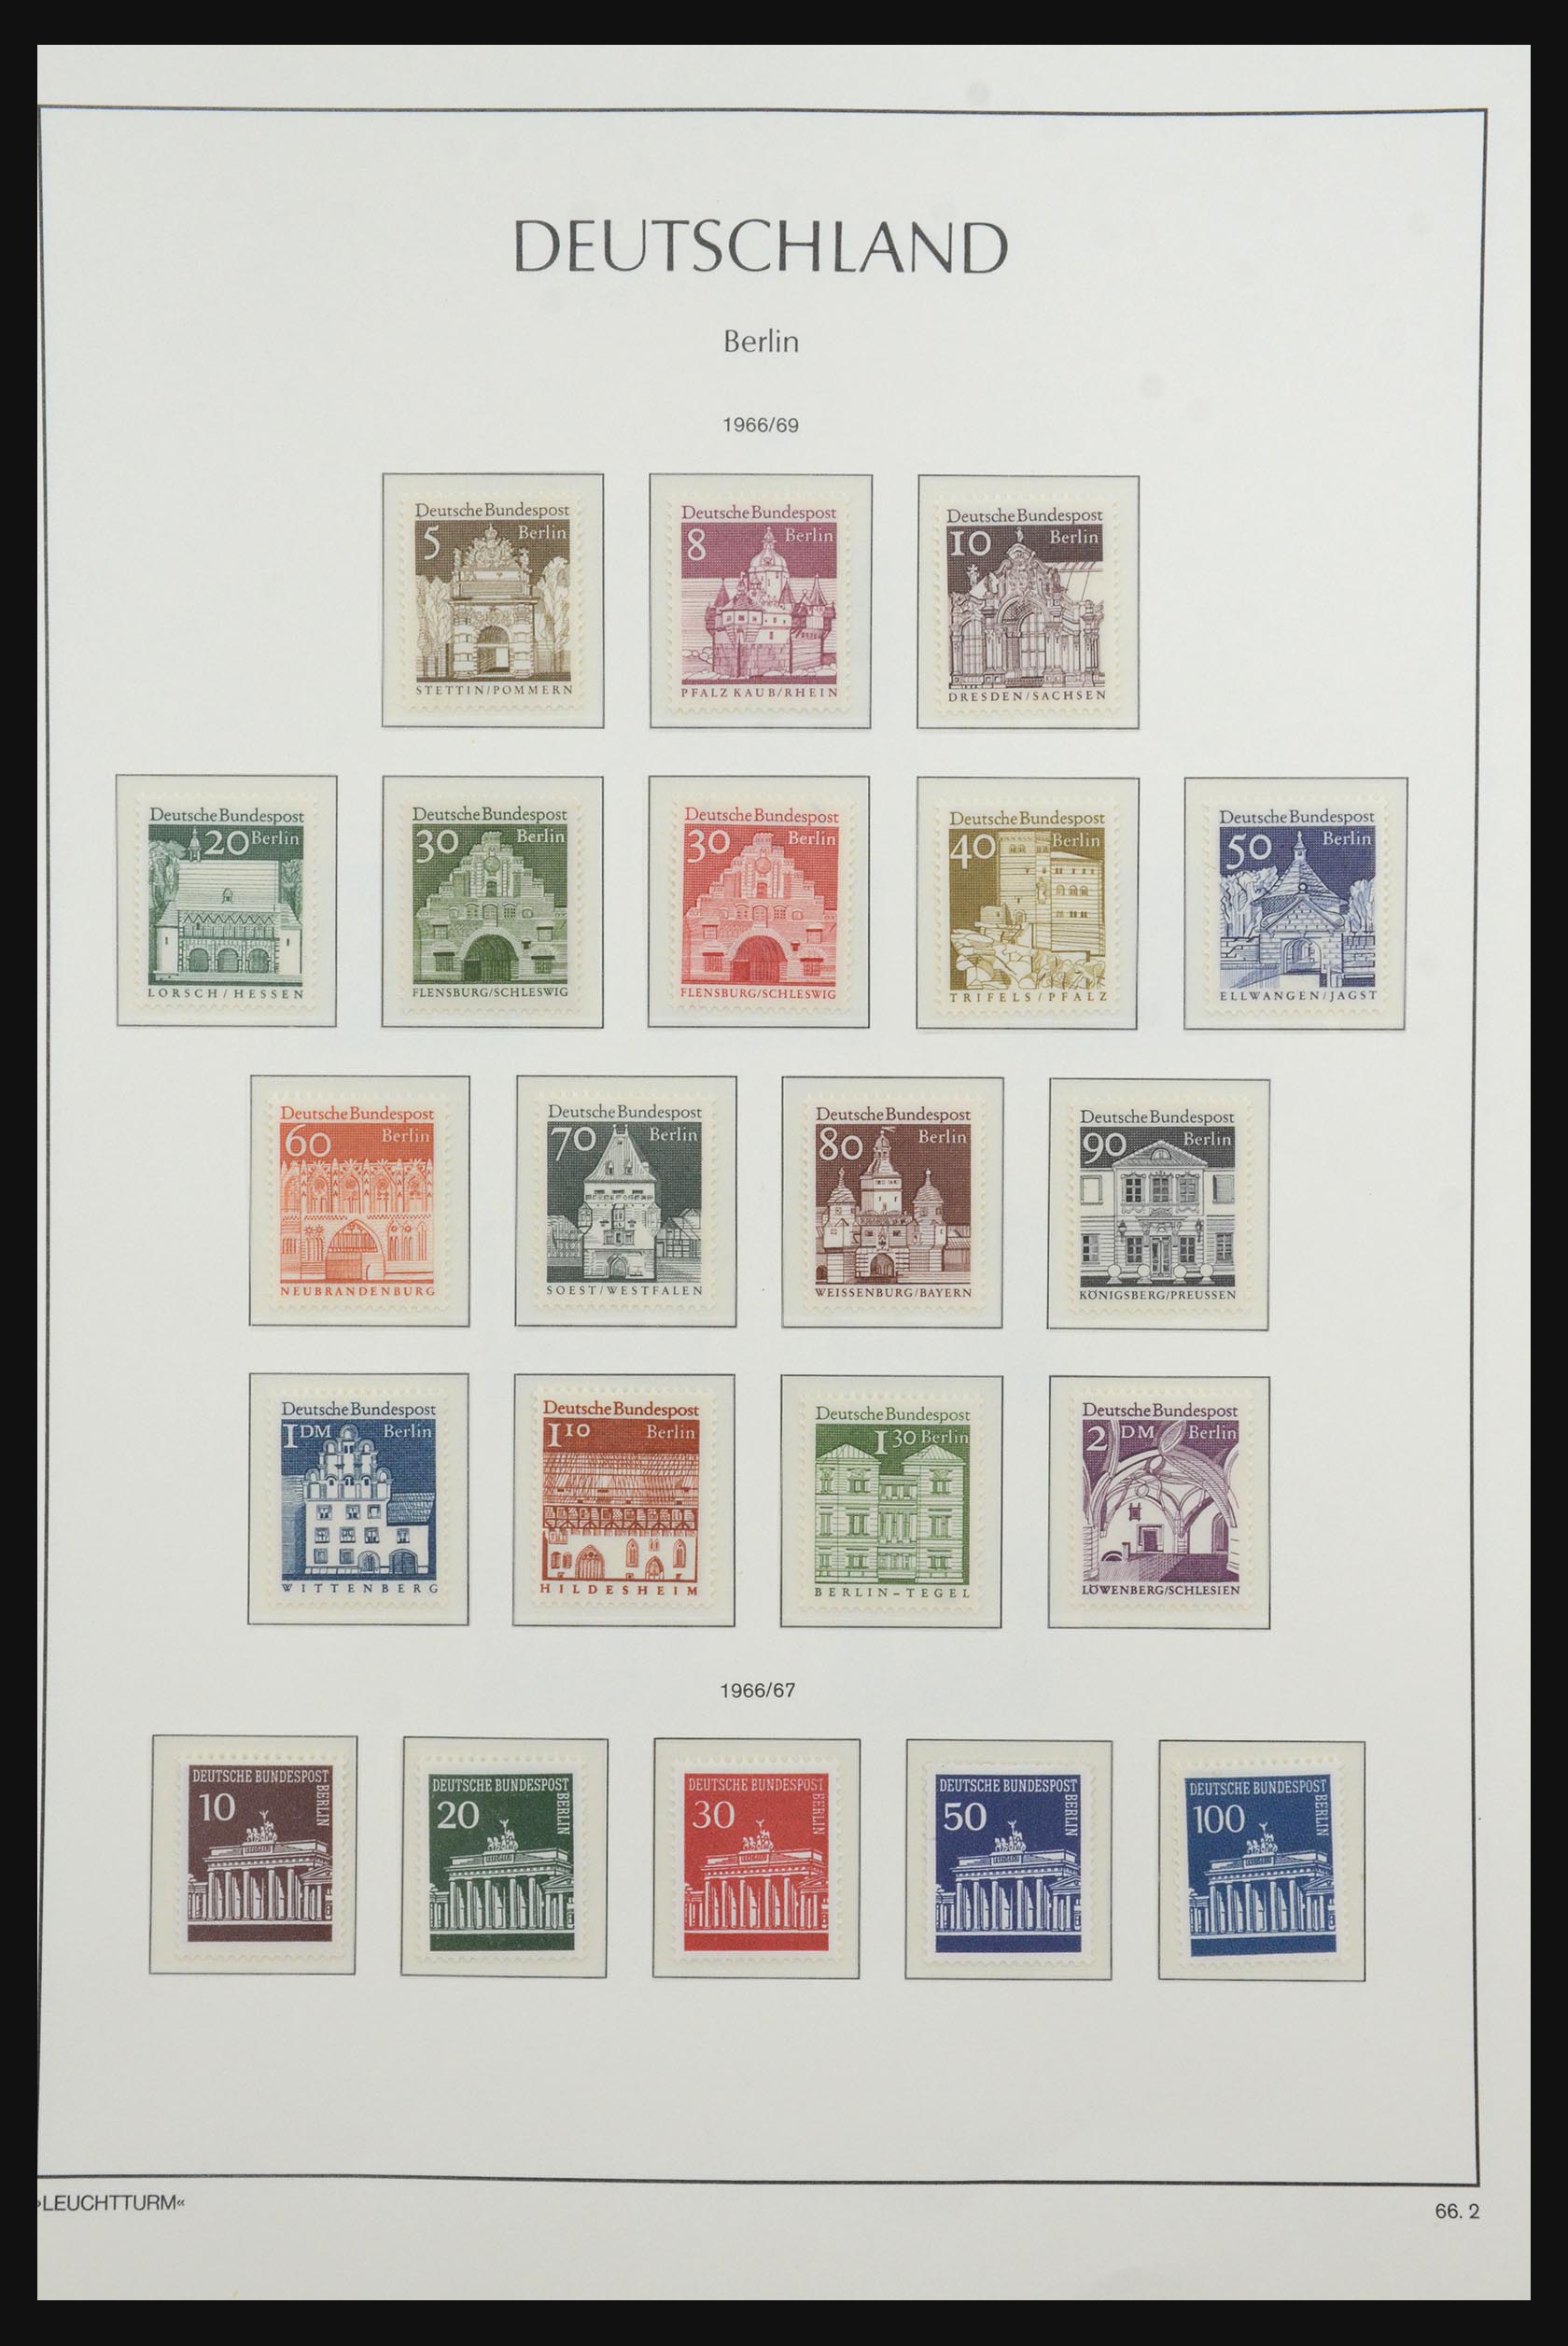 31601 024 - 31601 Bundespost, Berlin and Saar 1948-2008.